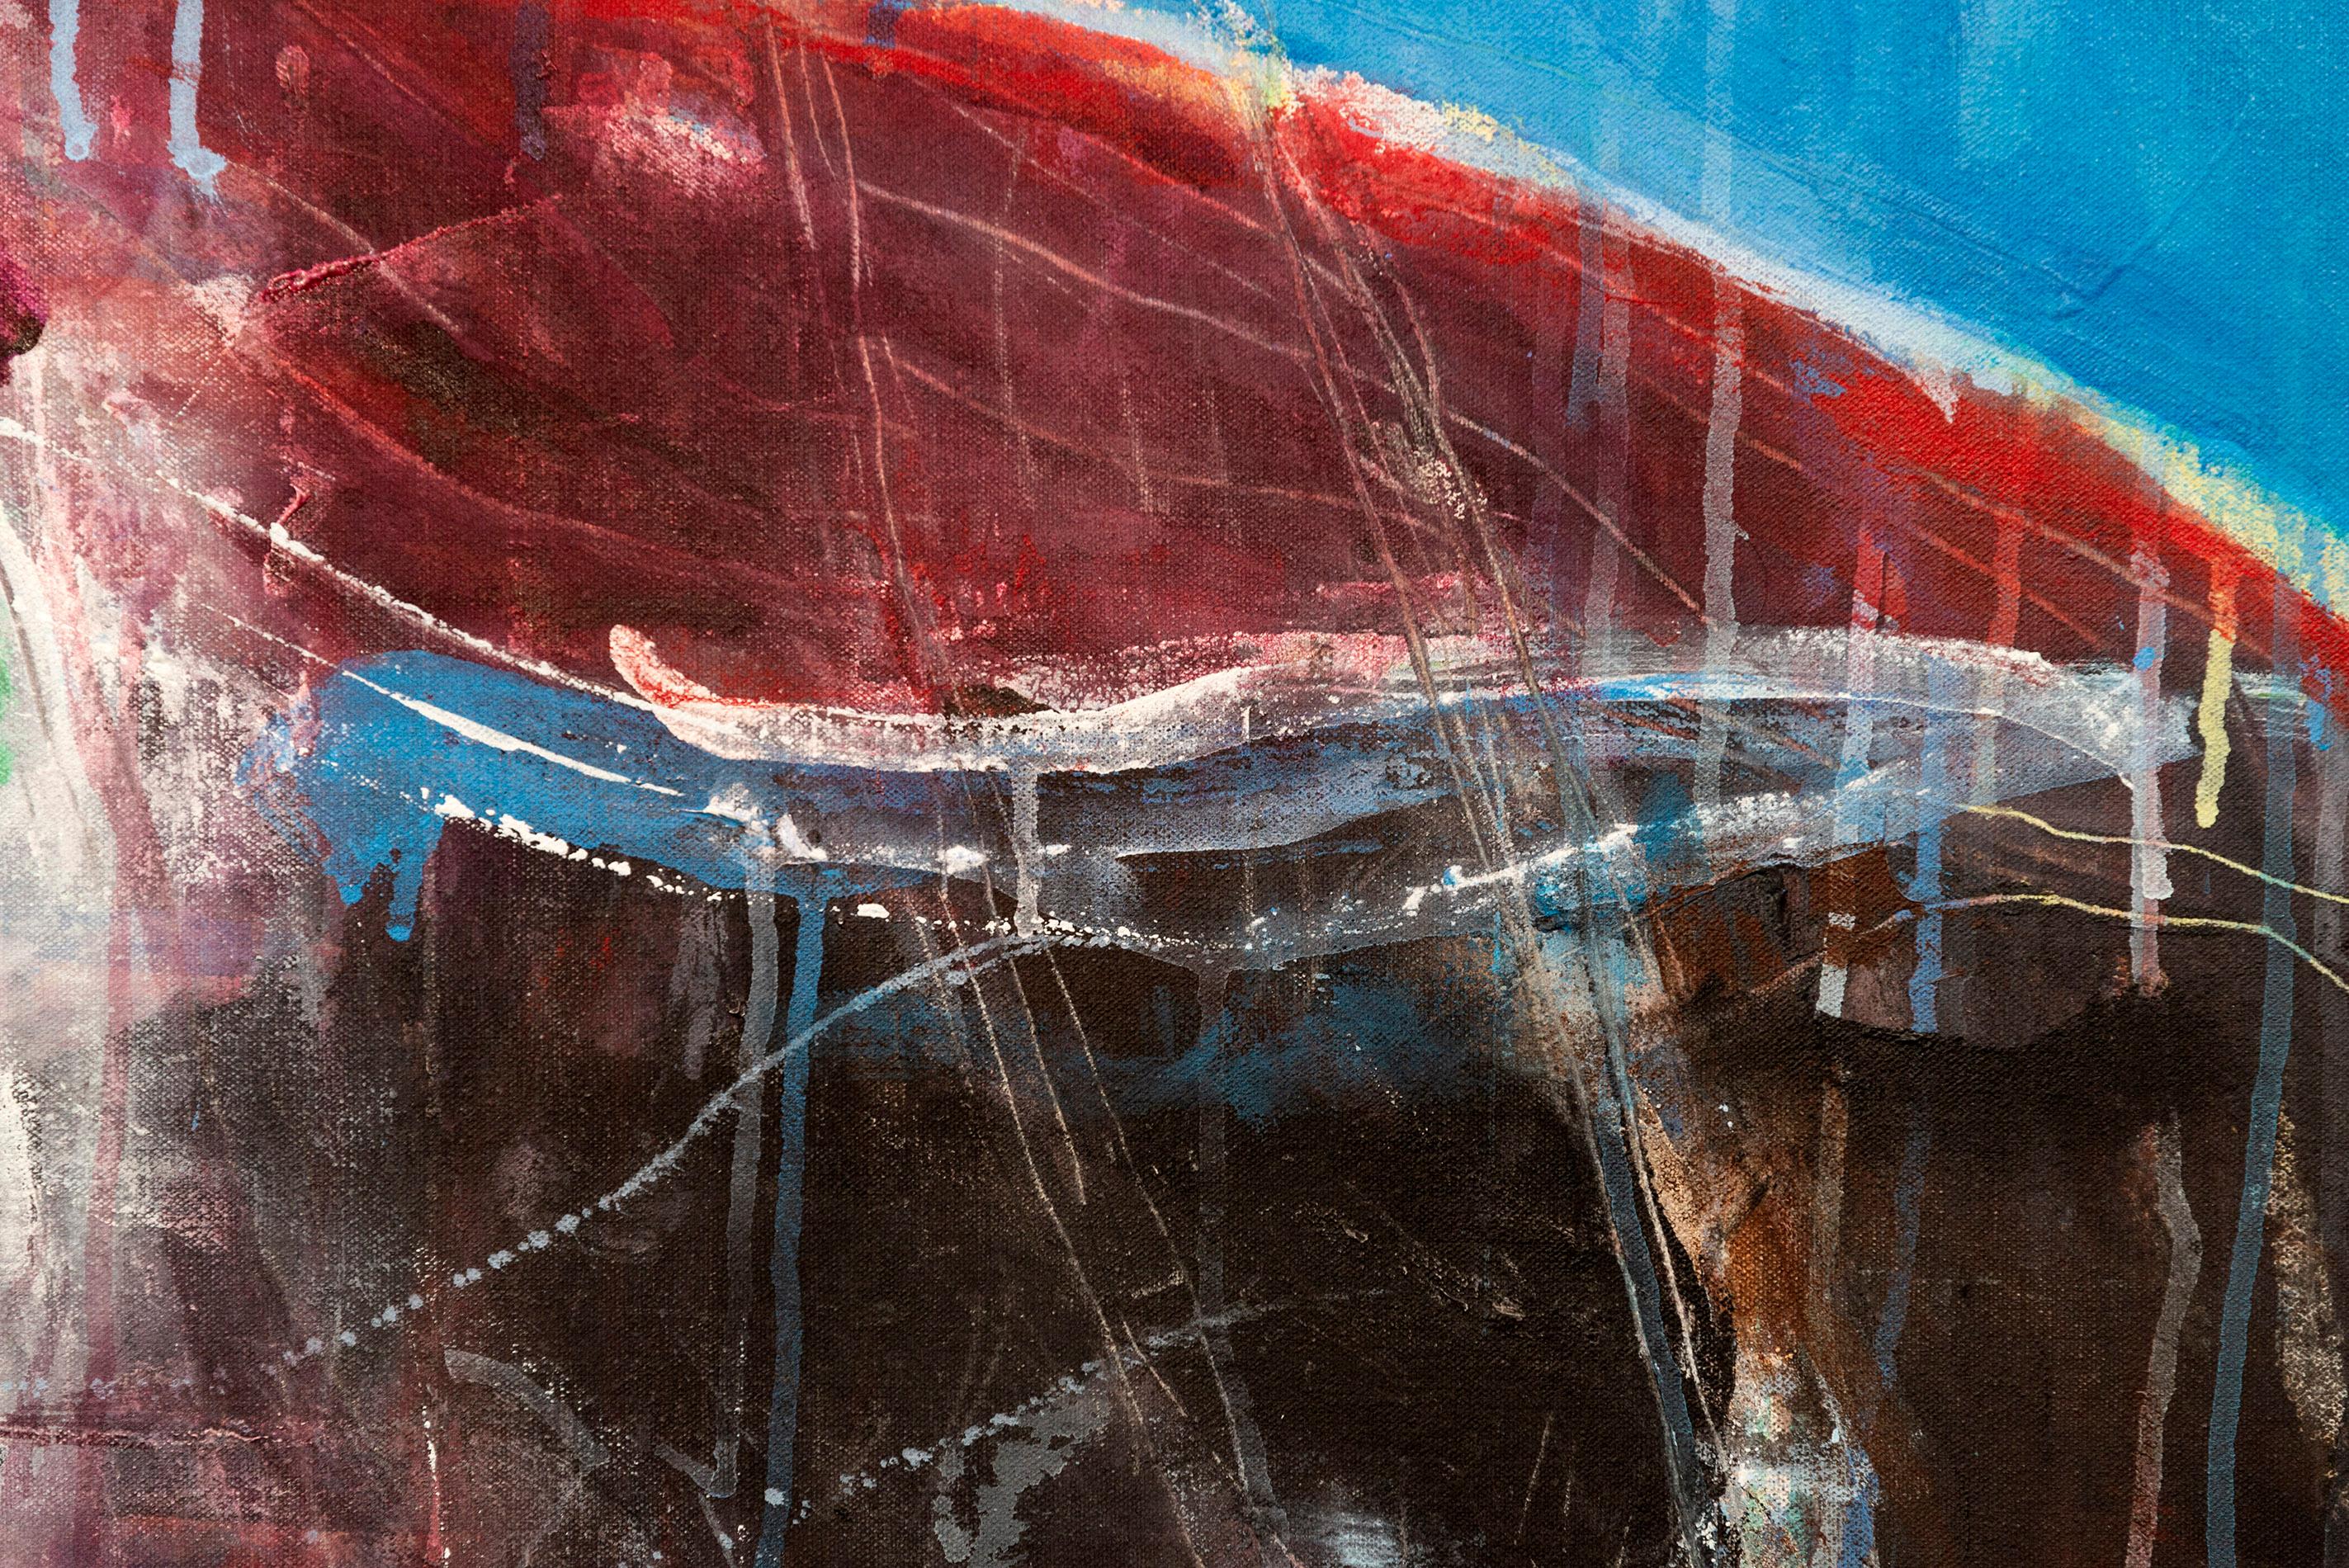 Northwest Passage No 5 - blue, black, indigenous, abstract, acrylic on canvas 2